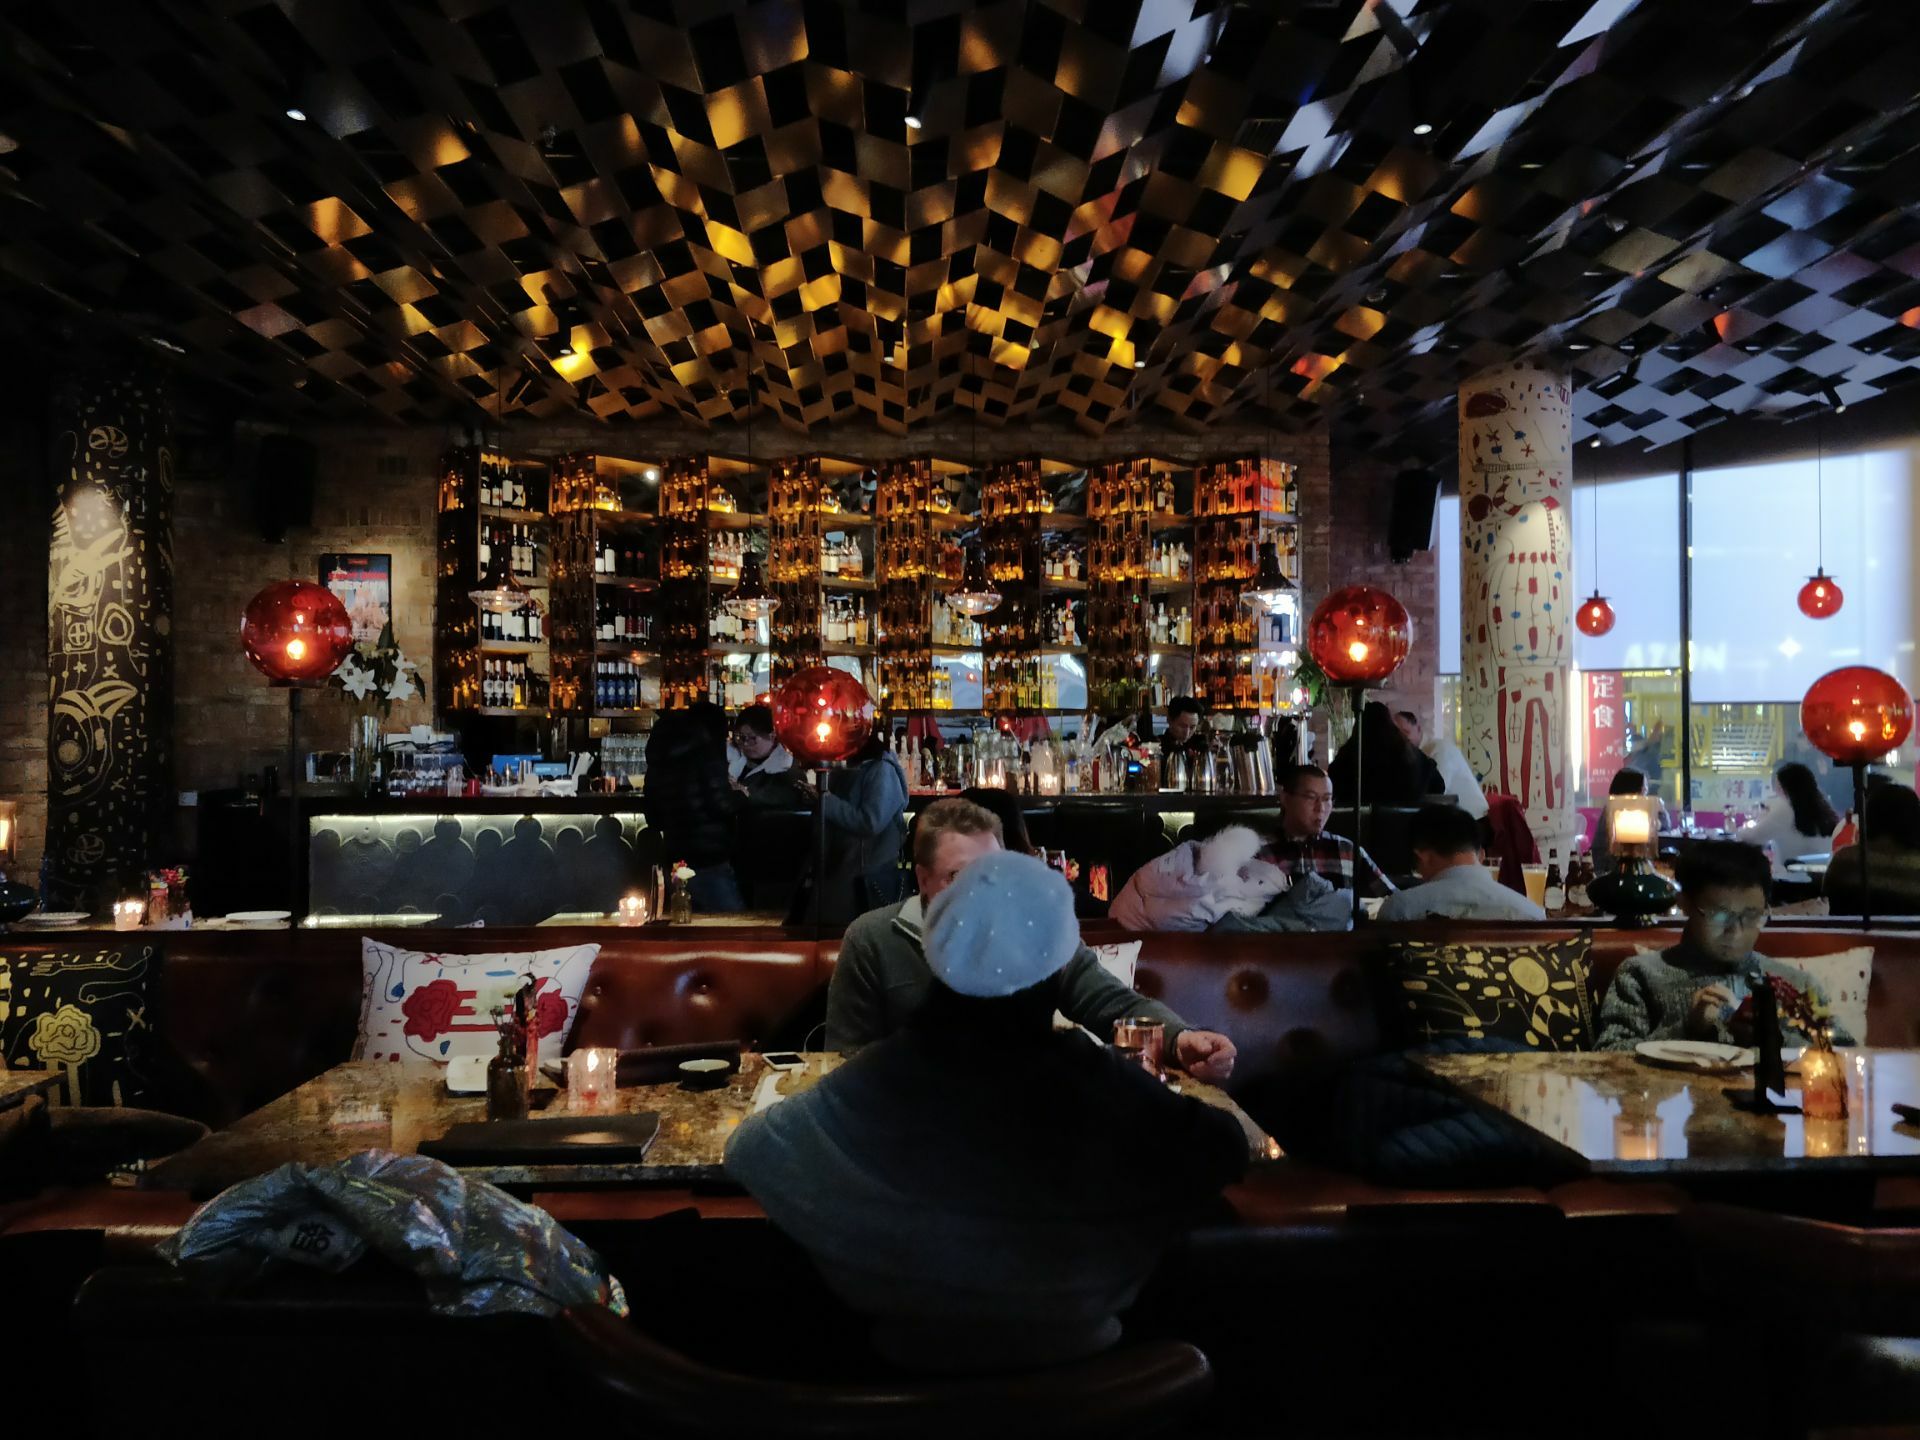 brownstone tapas & bar布朗石西班牙餐厅酒吧(永嘉庭店)